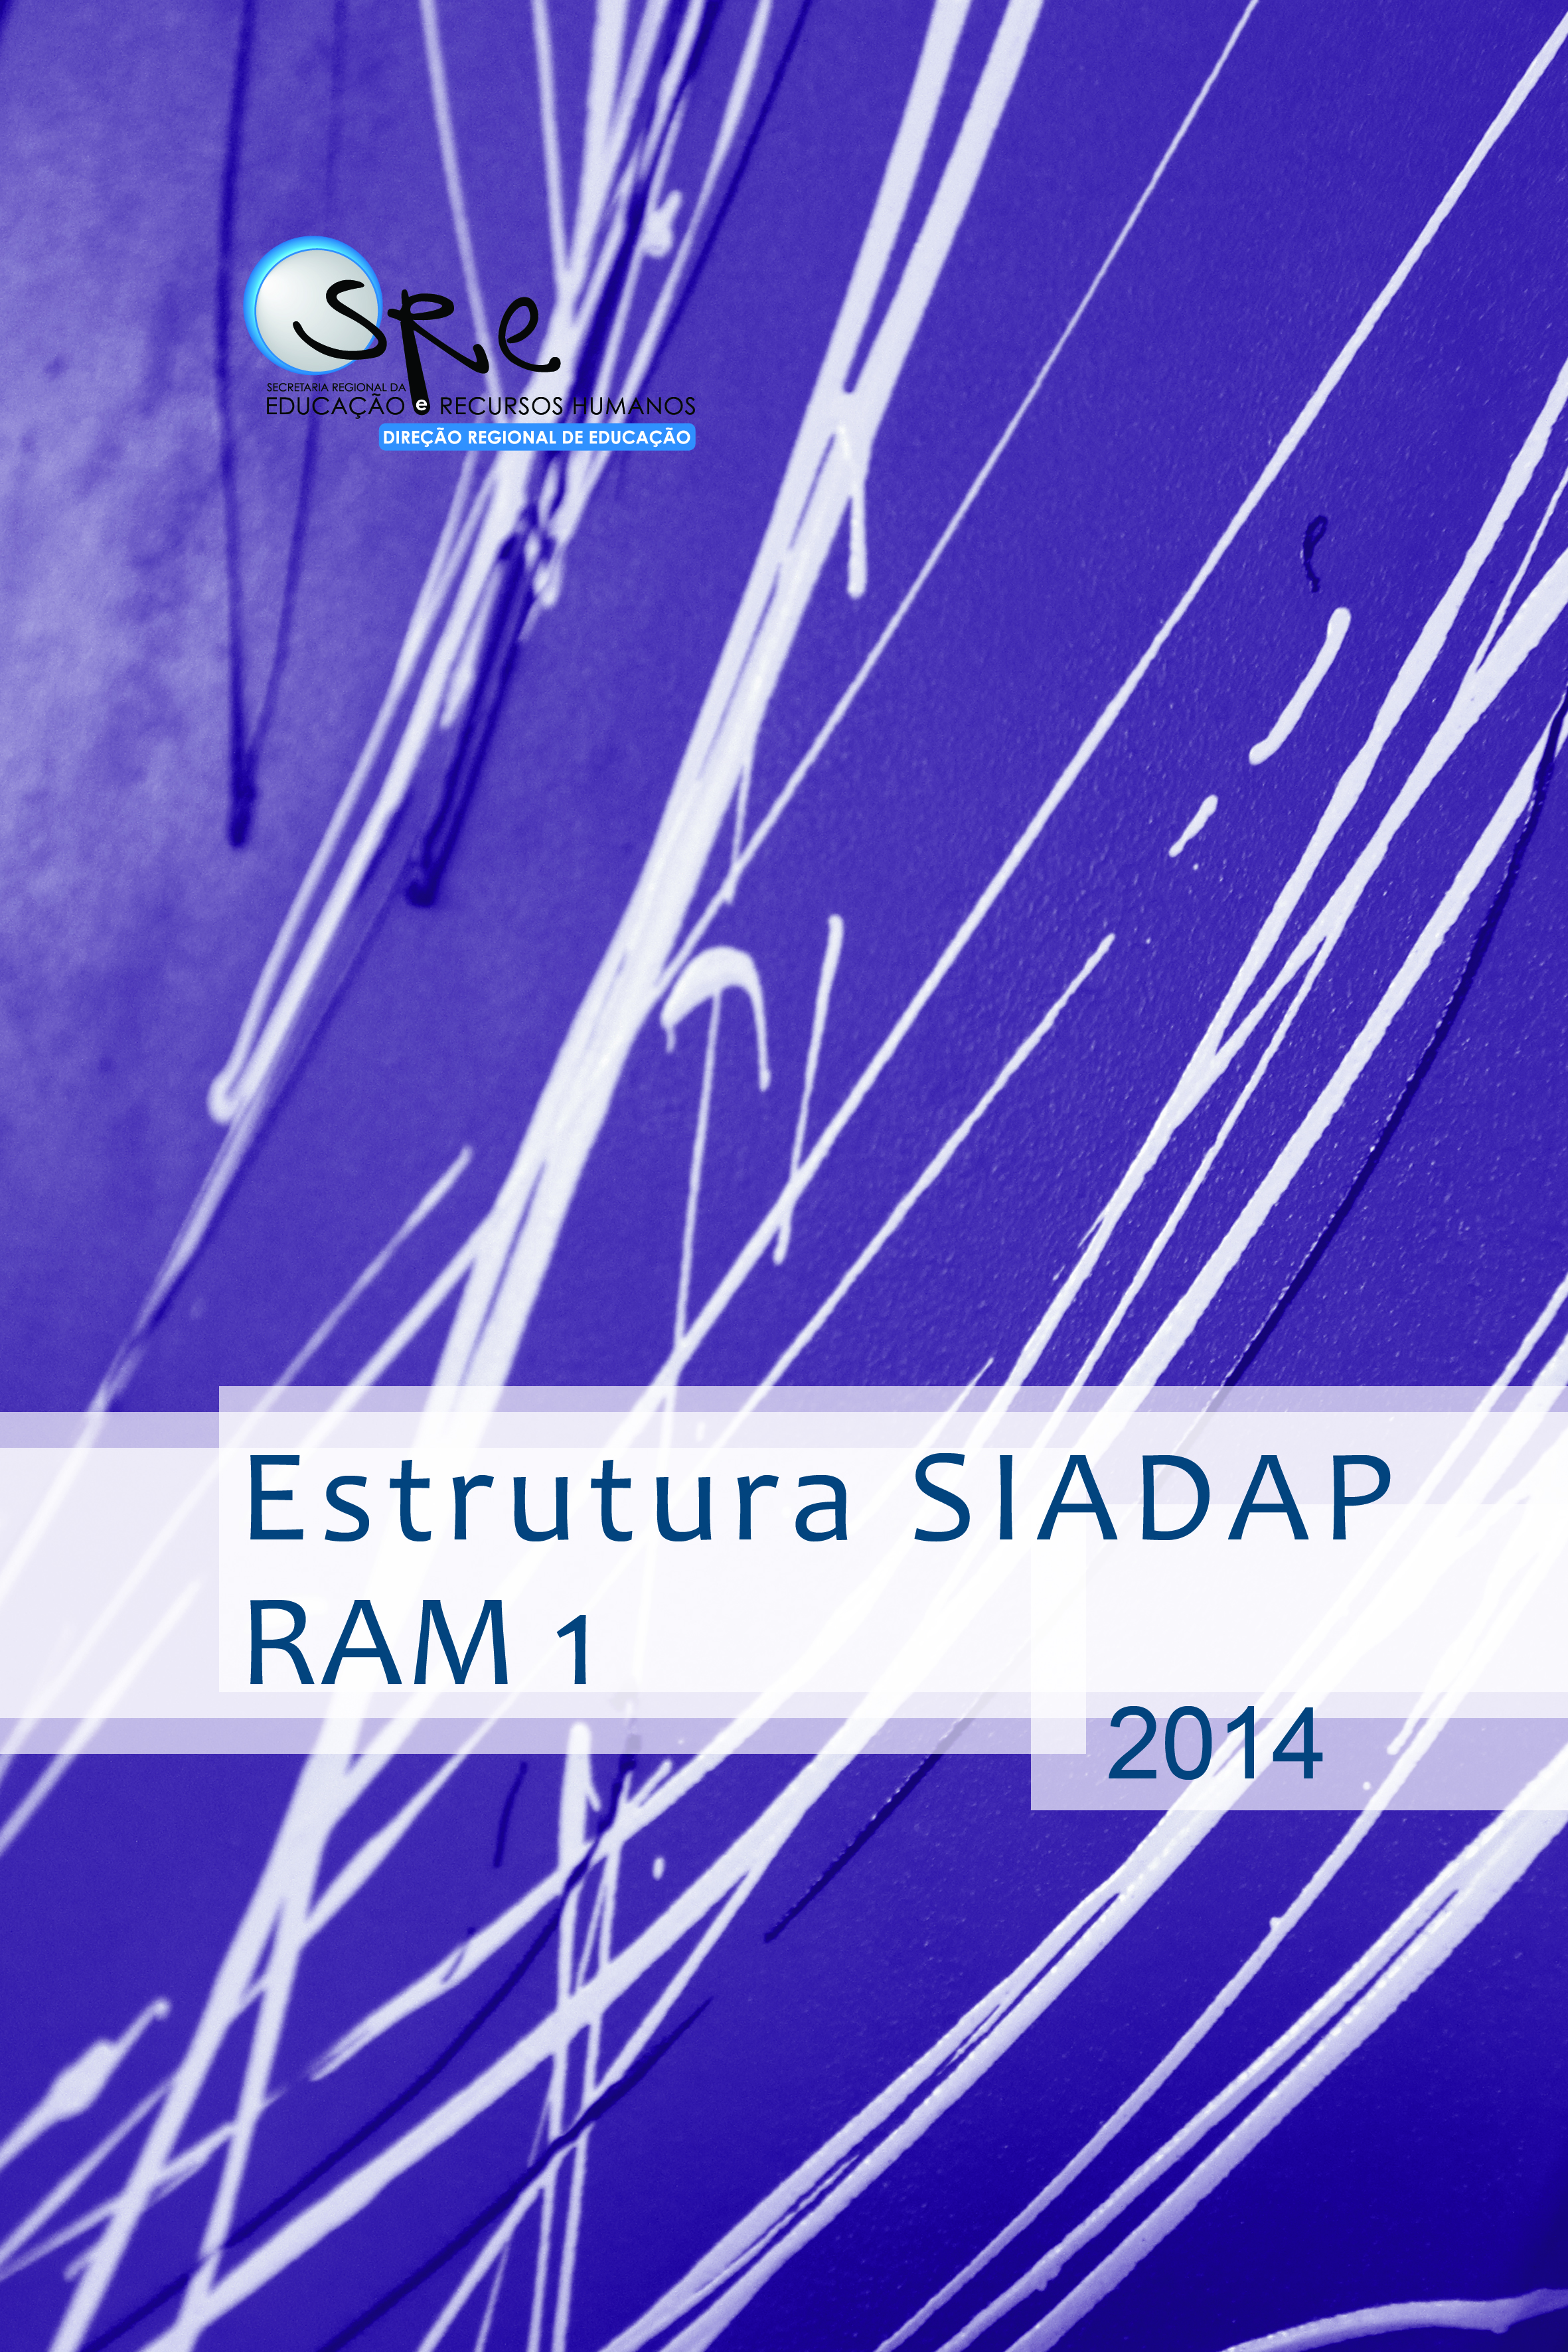 Estrutura SIADAP-RAM 1 2014